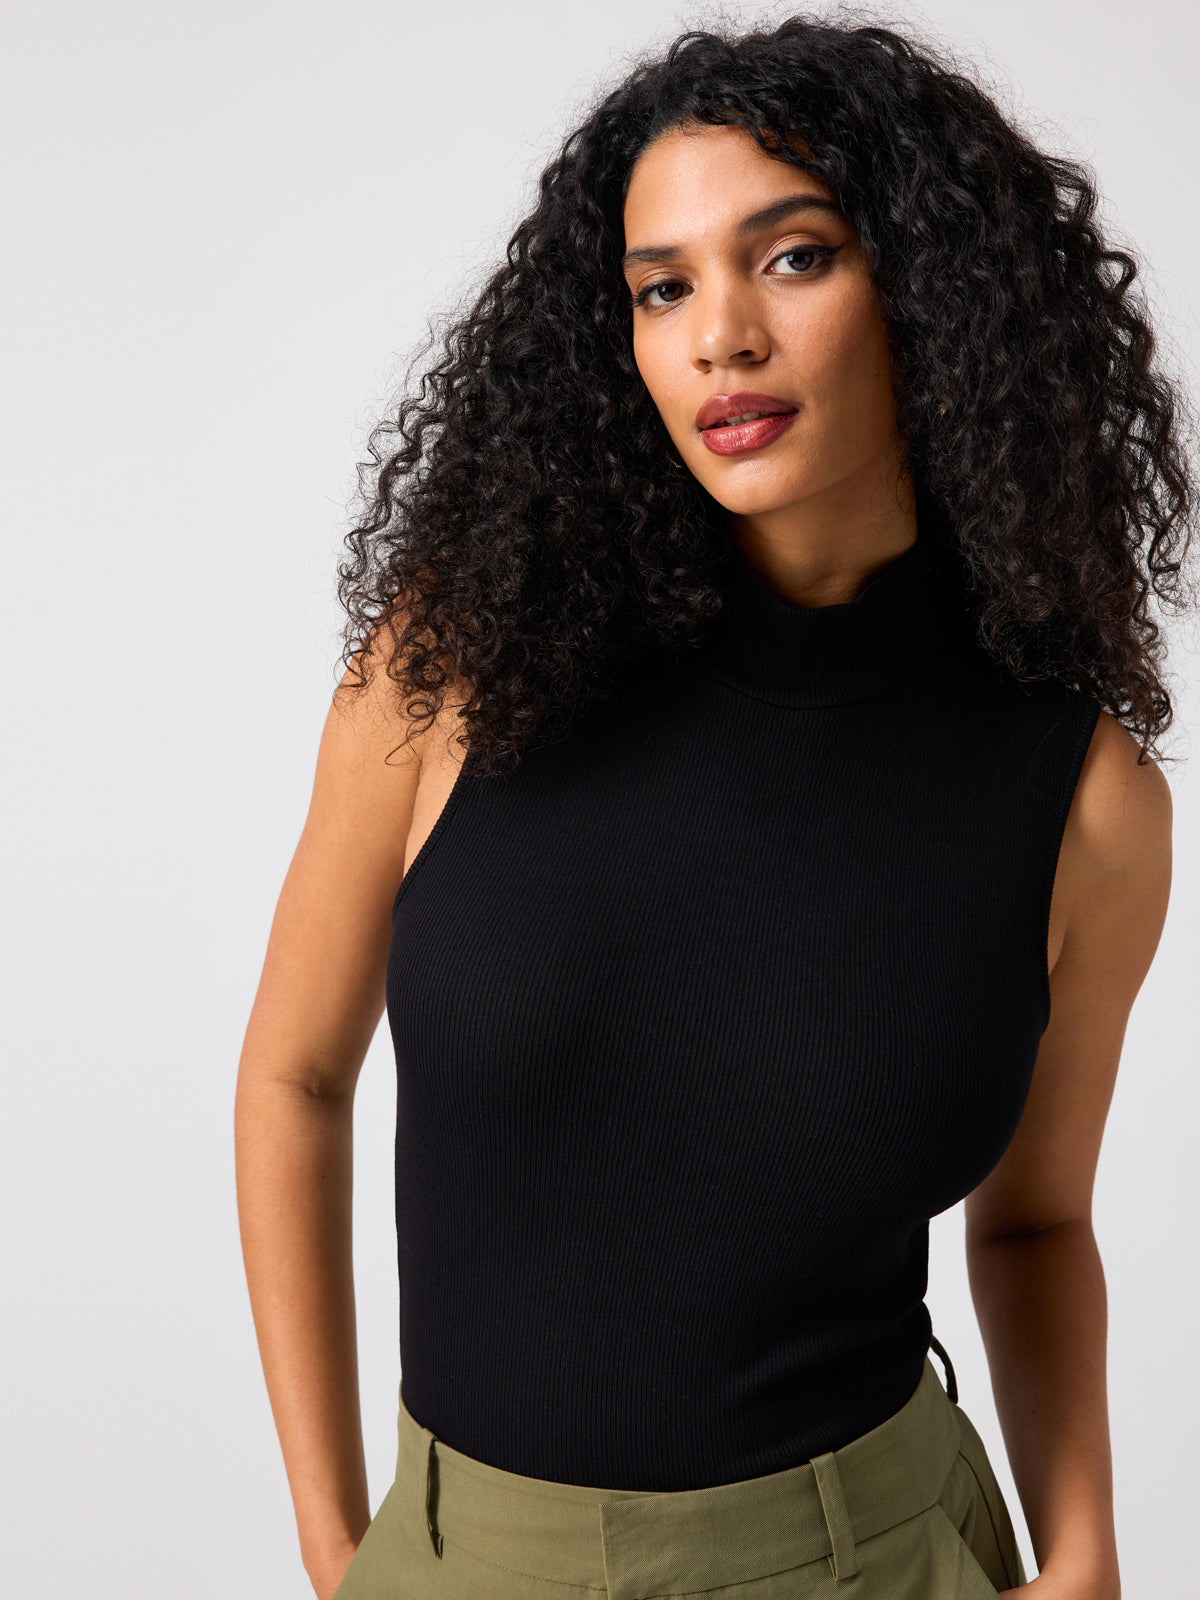 Sakkas 418131 Mock Neck Turtleneck Sleeveless Scuba Crop Top - Made in USA  - Black - S at  Women's Clothing store: Fashion T Shirts